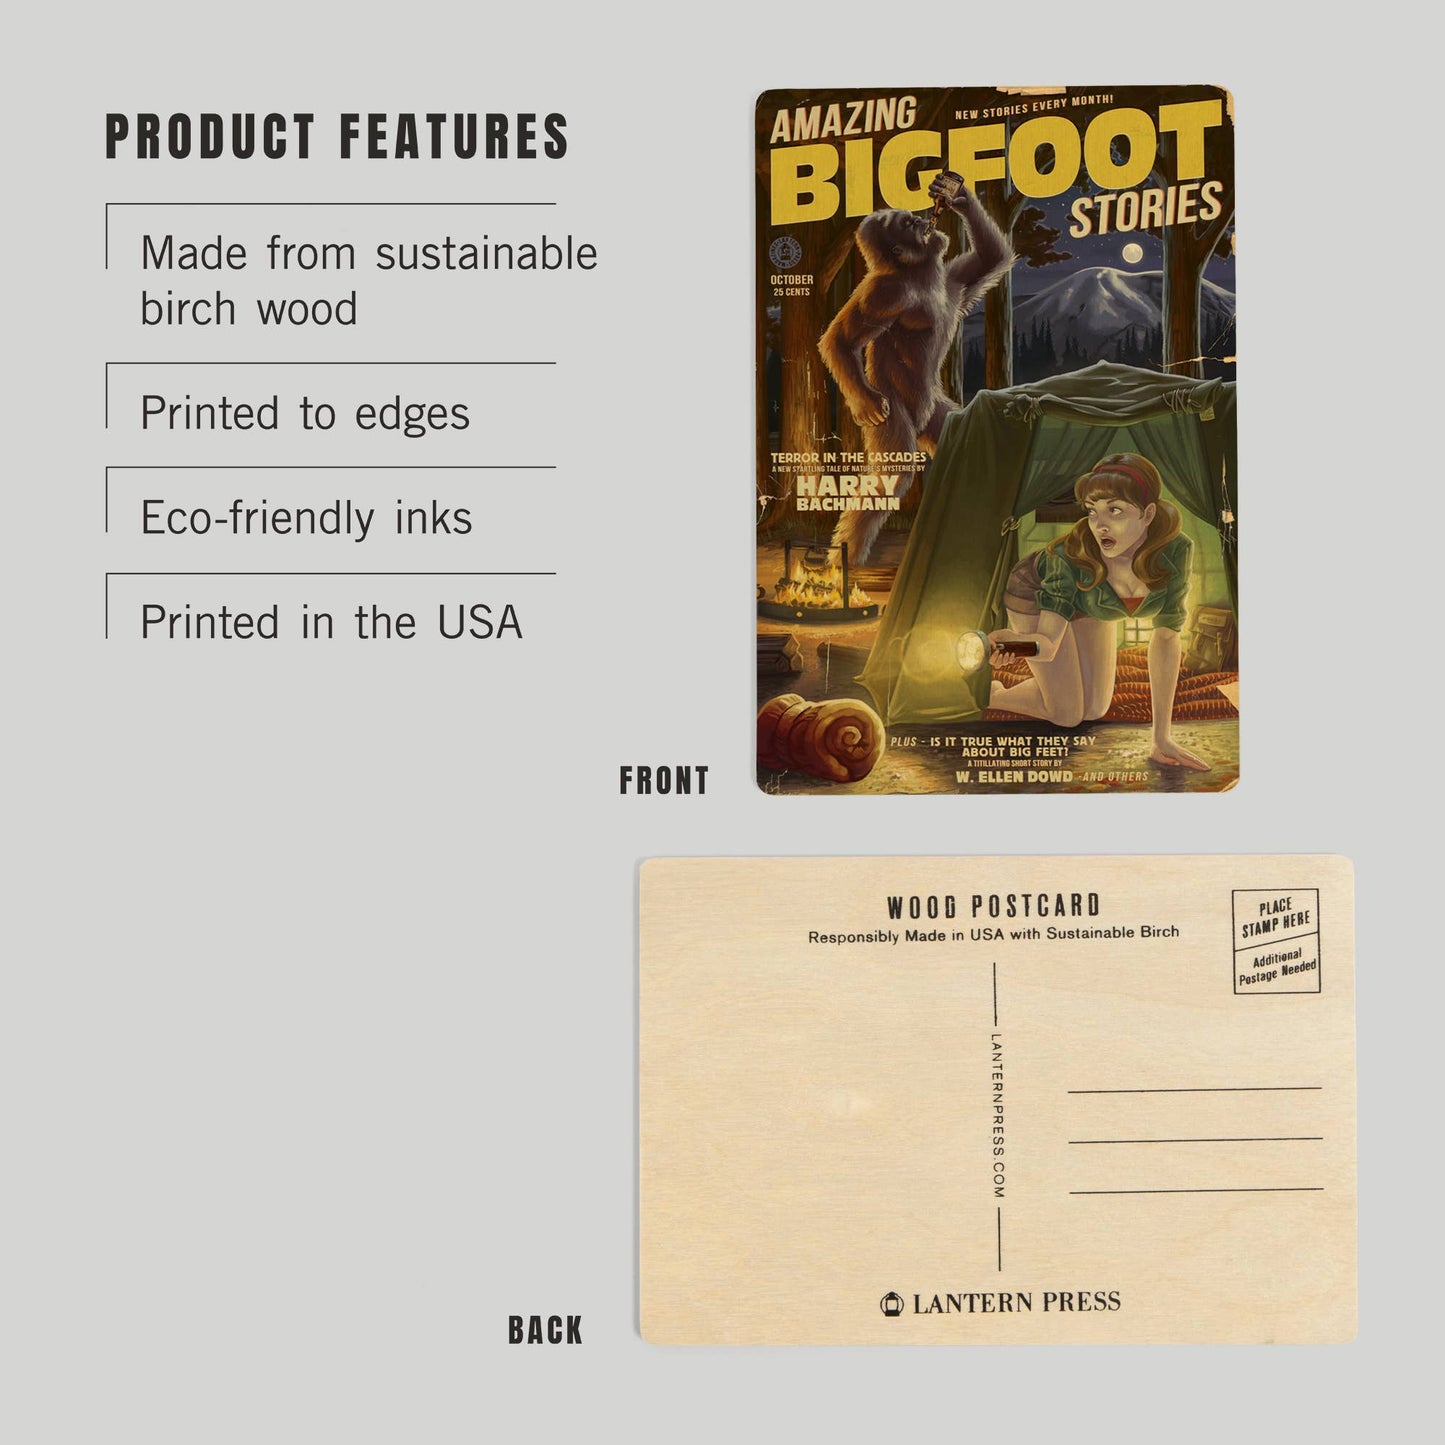 Wood Postcard - Amazing Bigfoot Stories